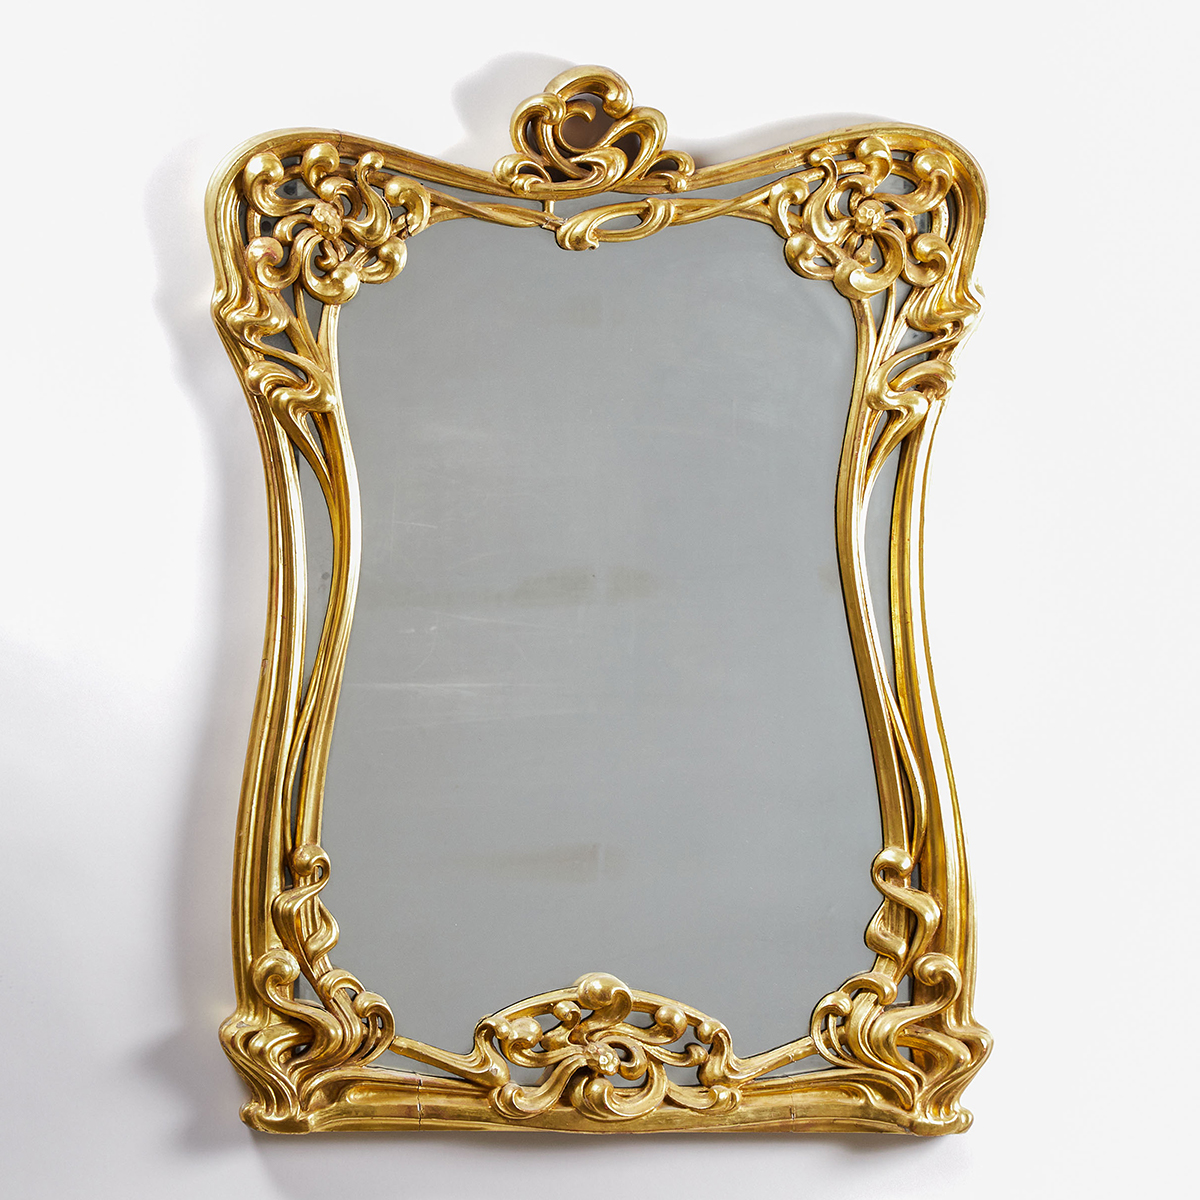 French Art Nouveau Giltwood Overmantel Mirror, Nancy, c.1900, 45 x 32.5 in — 114.3 x 82.6 cm